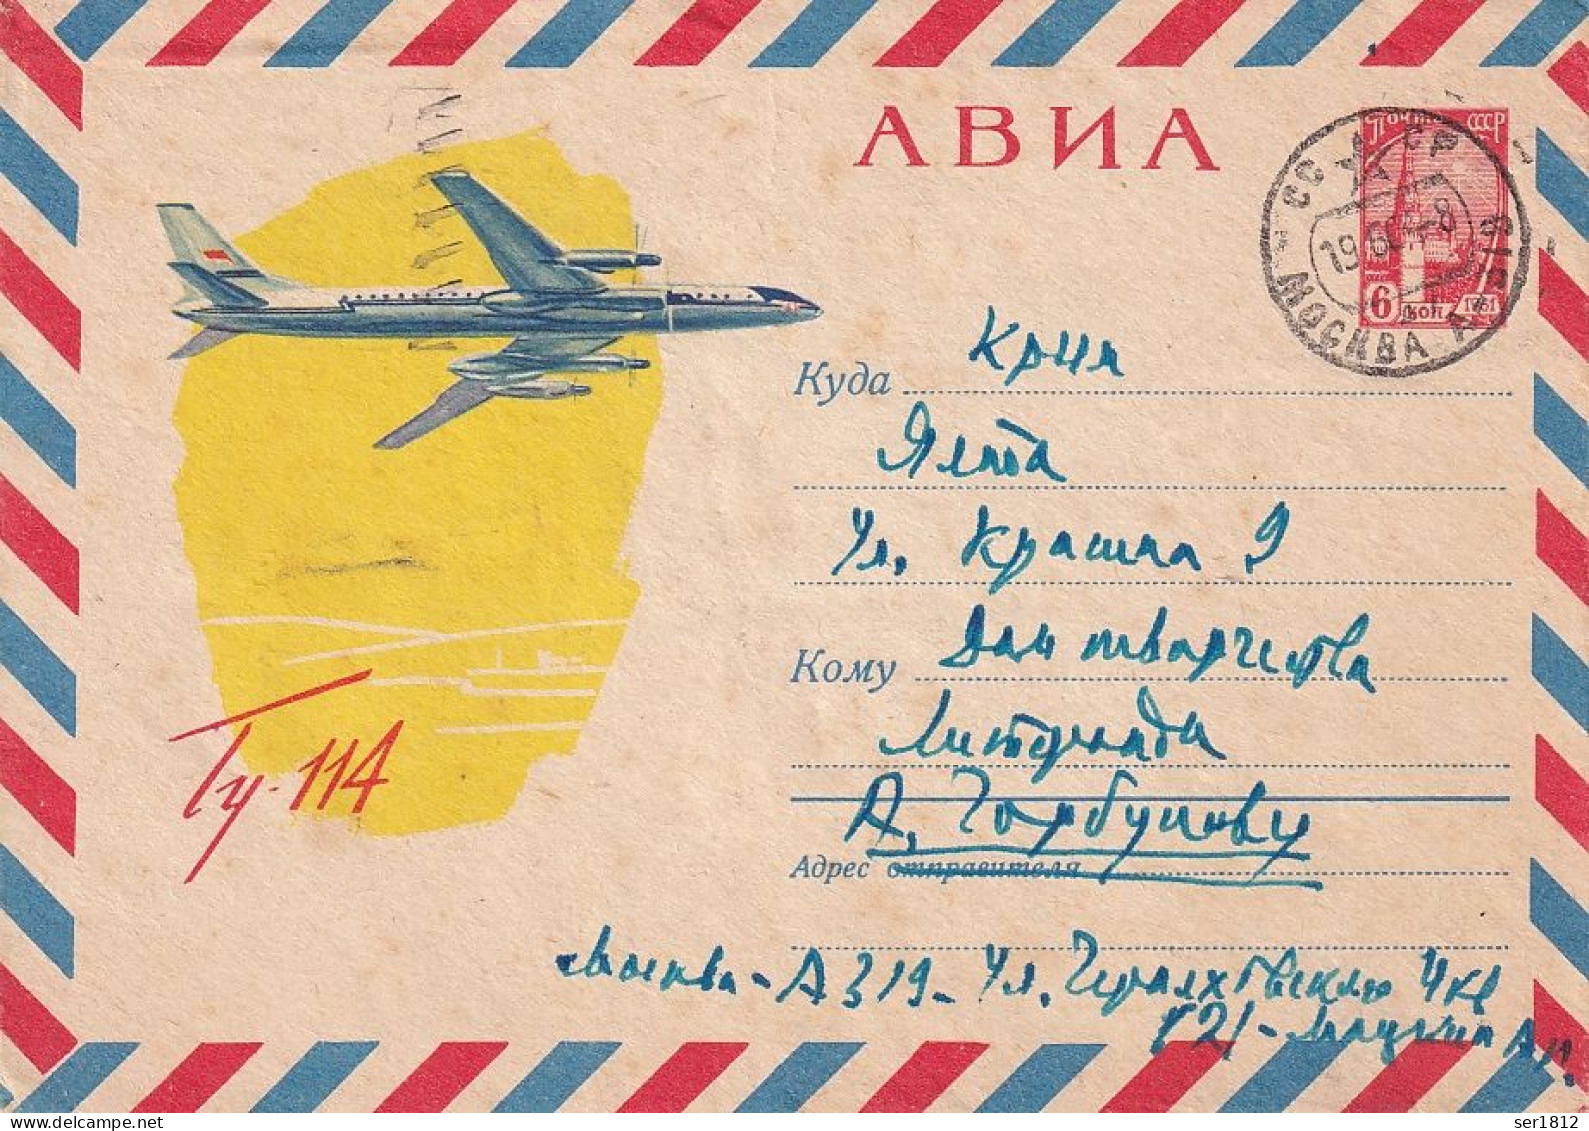 Russia Ussr 1964 Air Mail Cover From Moscow To Krim Ukraina Aircraft TU - 114 - Briefe U. Dokumente